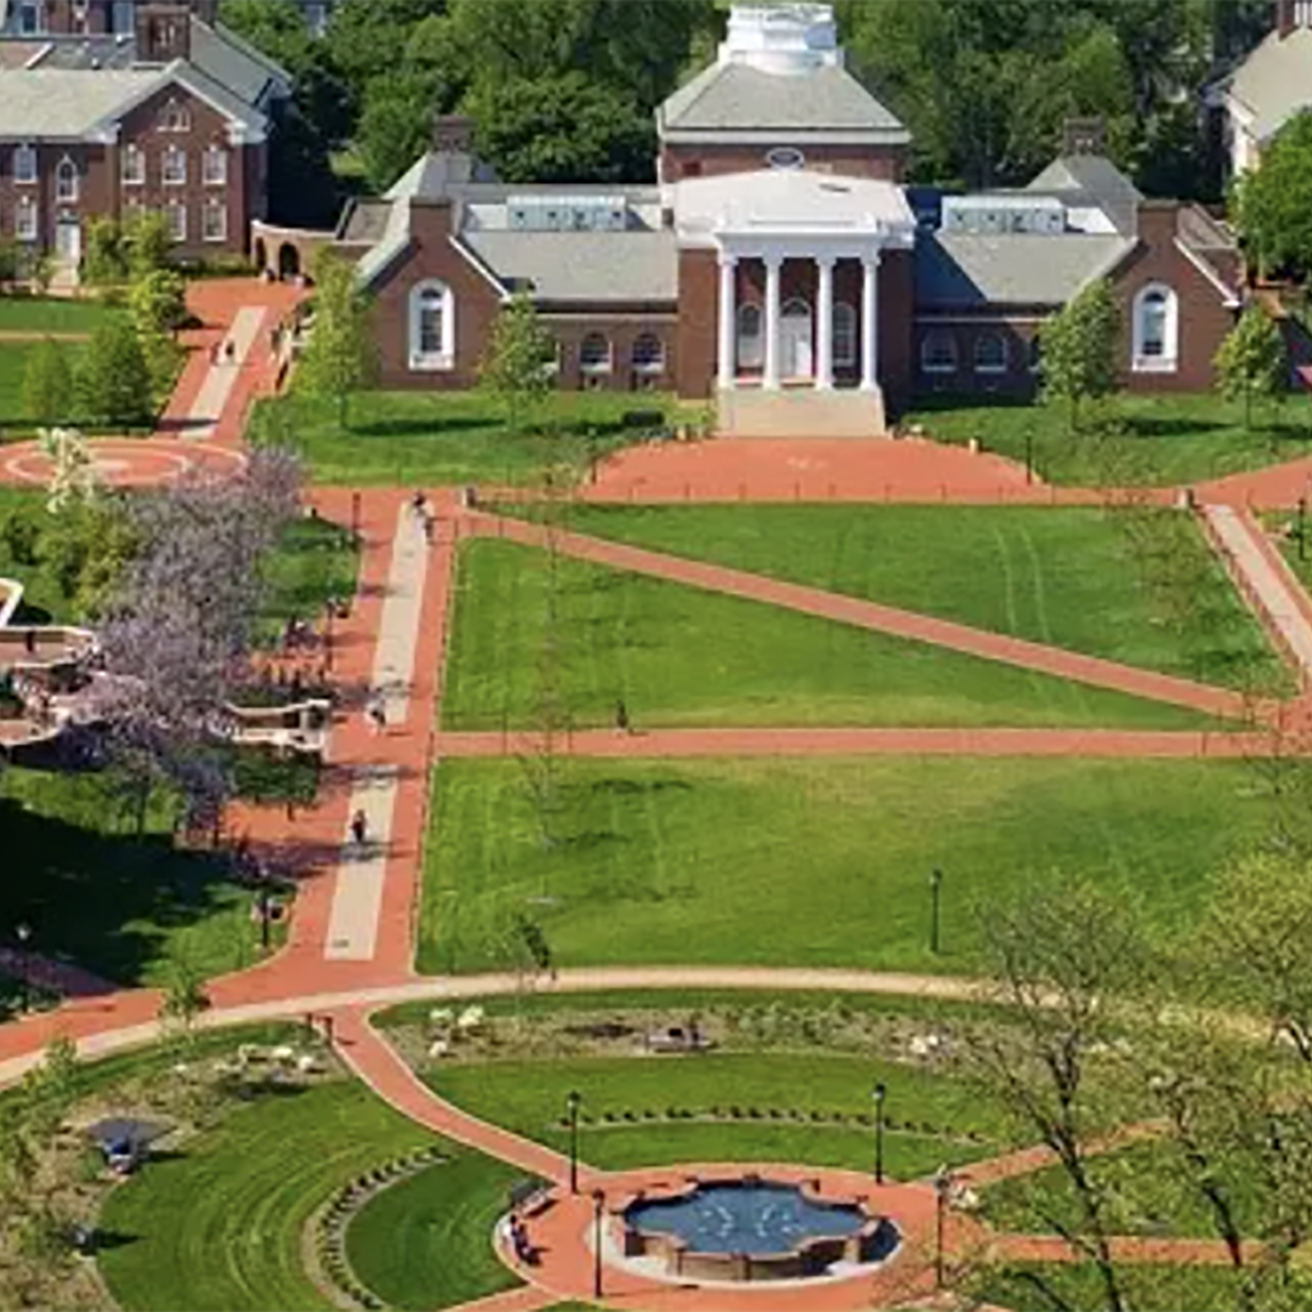 University of Delaware campus